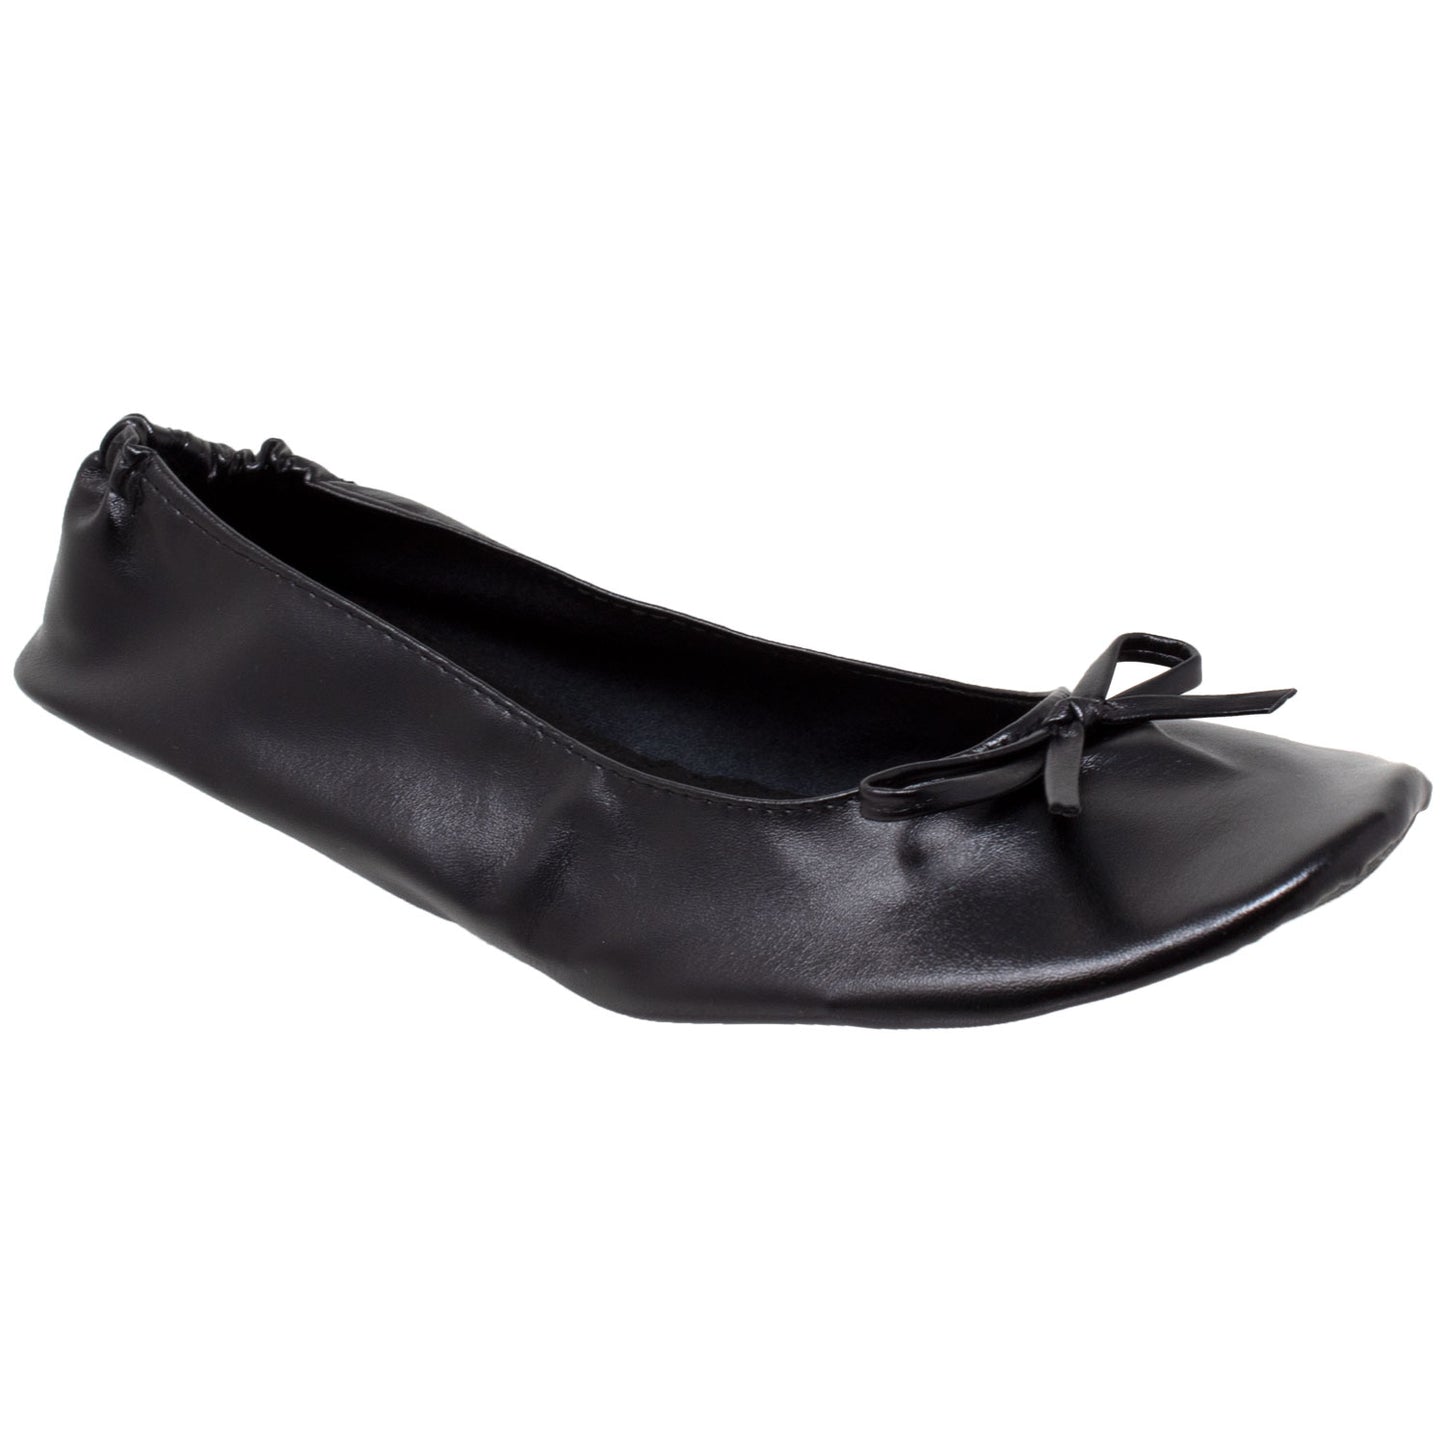 Foldable Ballet Flats Women's Travel Portable Comfortable Shoes Black SOBEYO